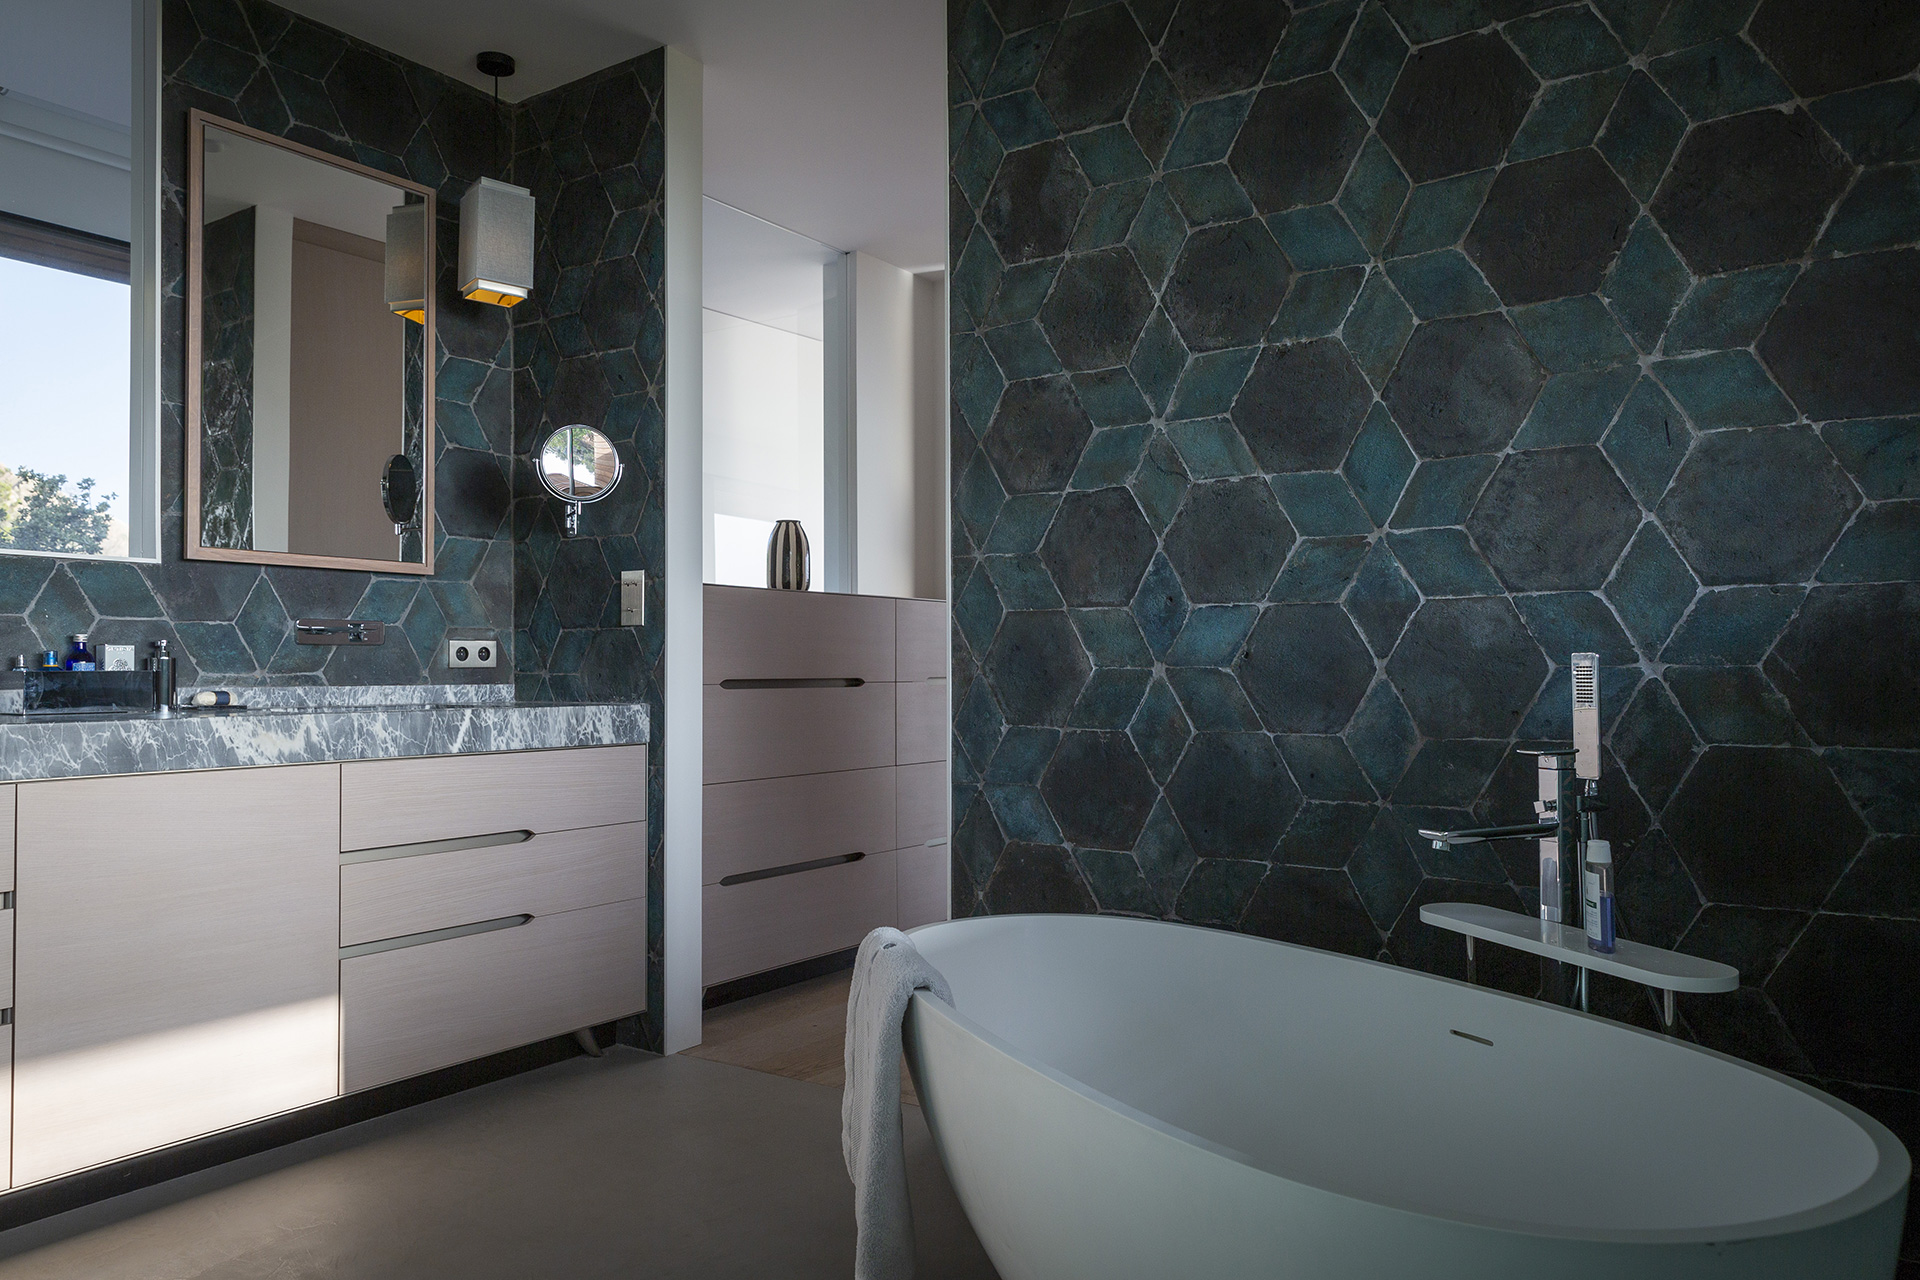 Bathroom of a villa in Corsica by Borella Art Design